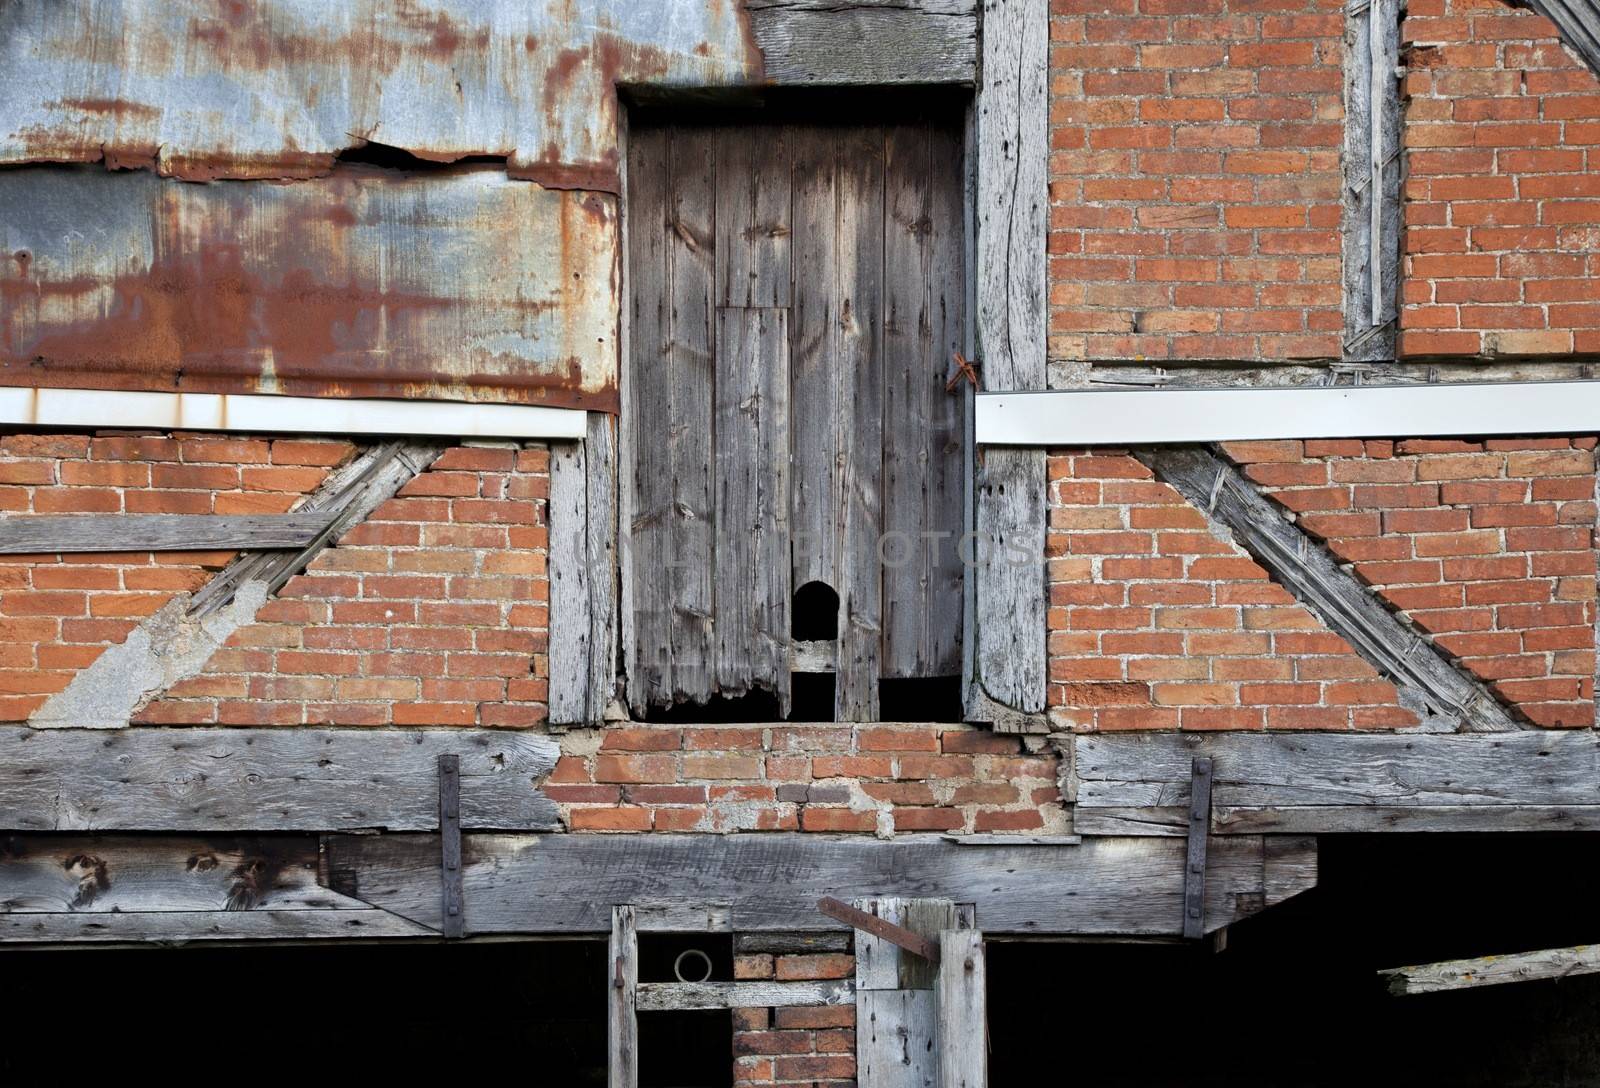 Dilapidated Warwickshire barn facade, England.